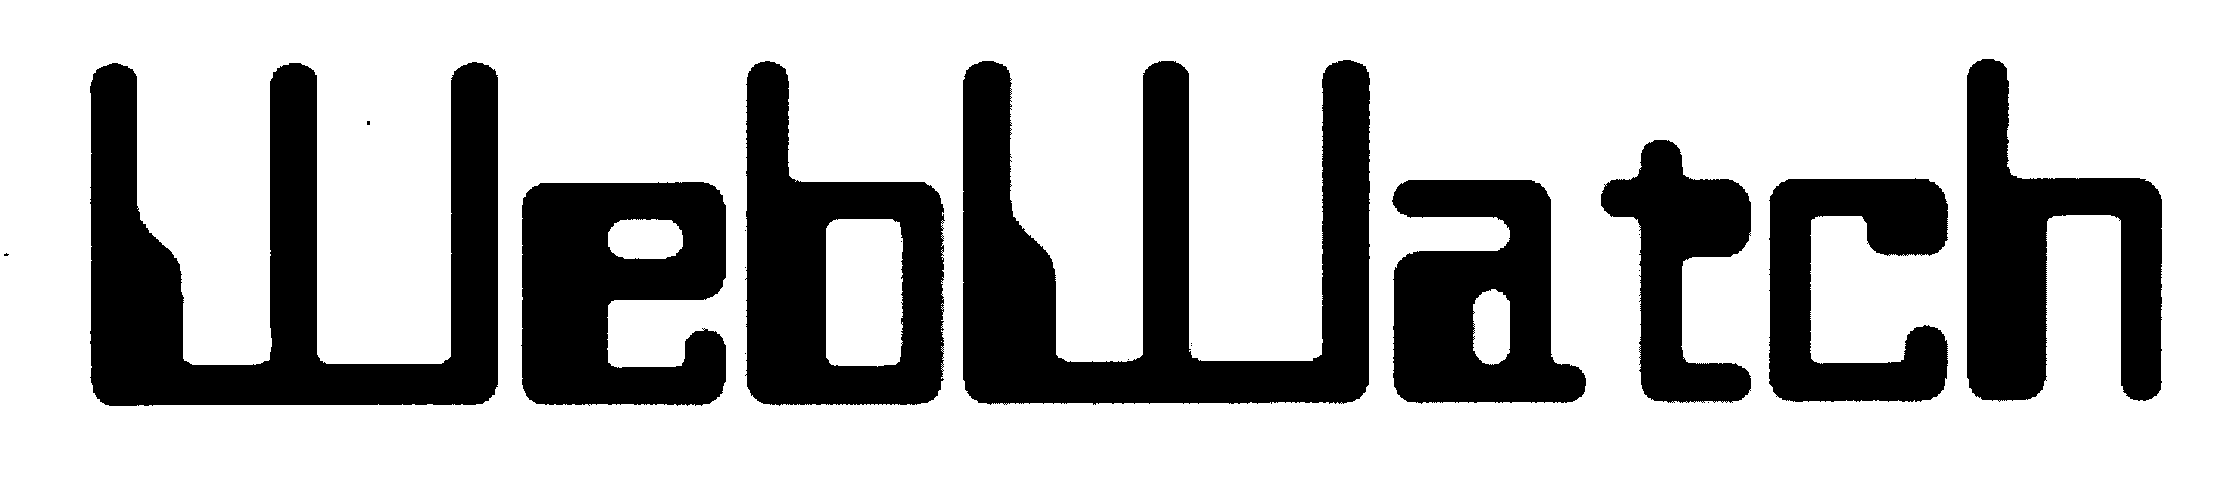 Trademark Logo WEBWATCH